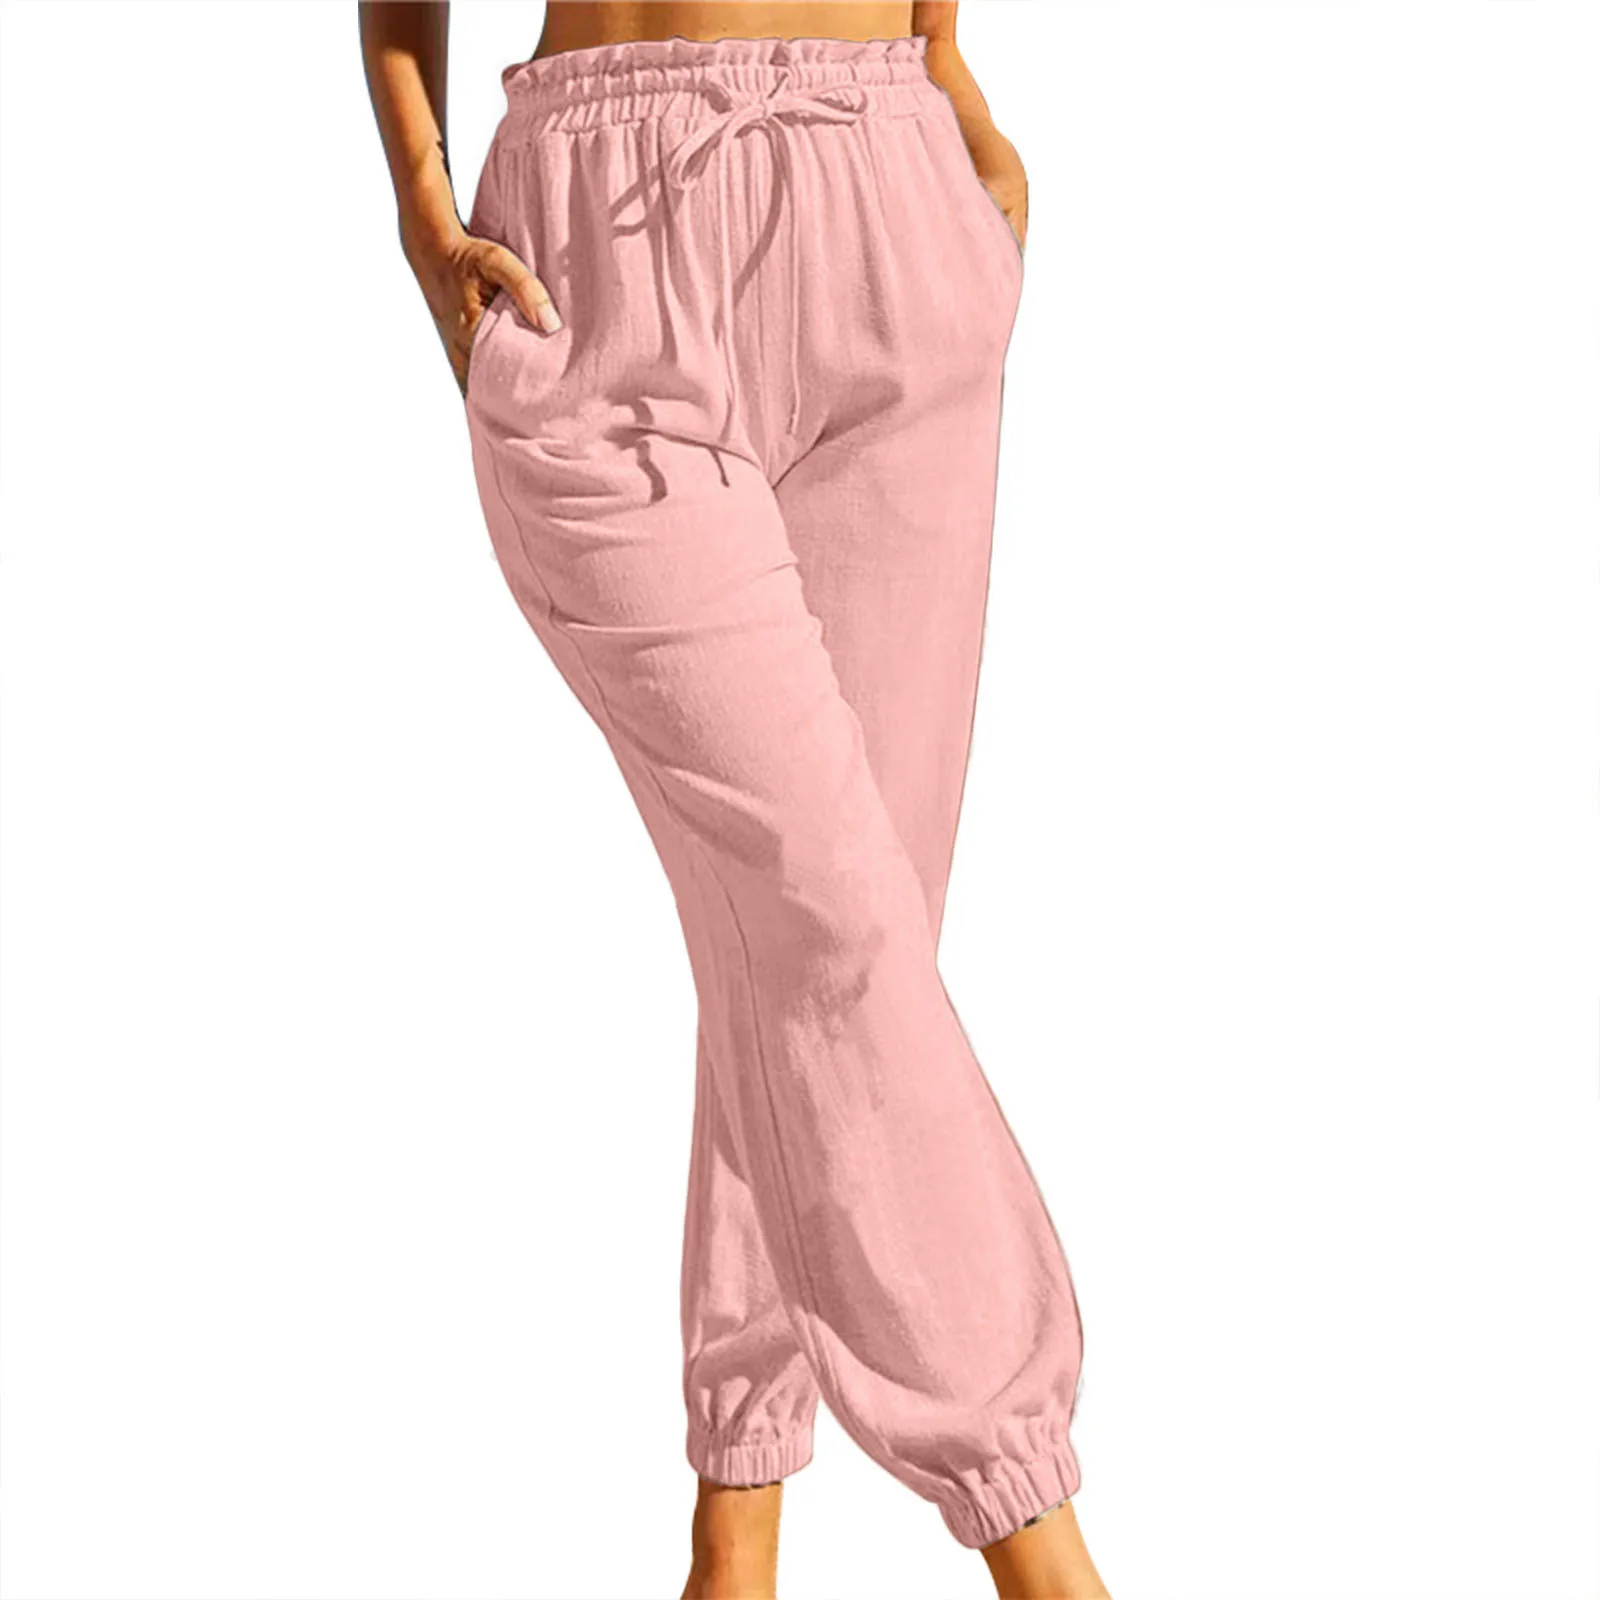 Women Casual Cotton Linen Pants Fashion Solid Elastic Waist Harem Pants With Pockets Drawstring Comfy Crpped Pants Pantalones